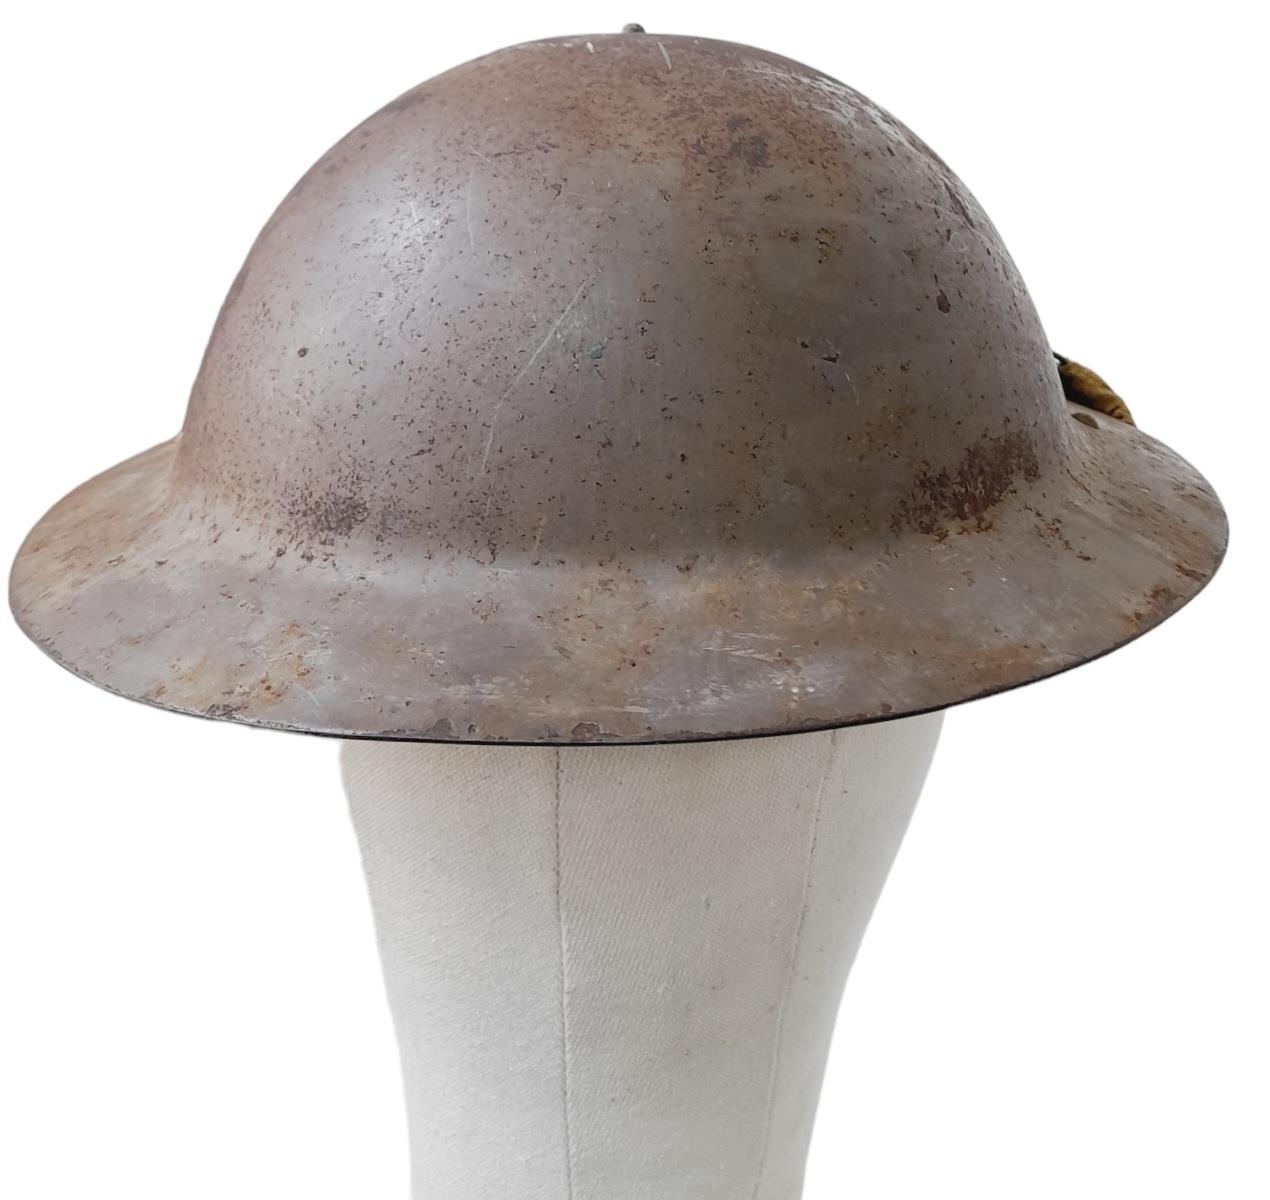 Rare 1941 Dated WW2 British Raw Edge Mk II Helmet. These were made by Briggs Motor Bodies Ltd of - Image 3 of 5